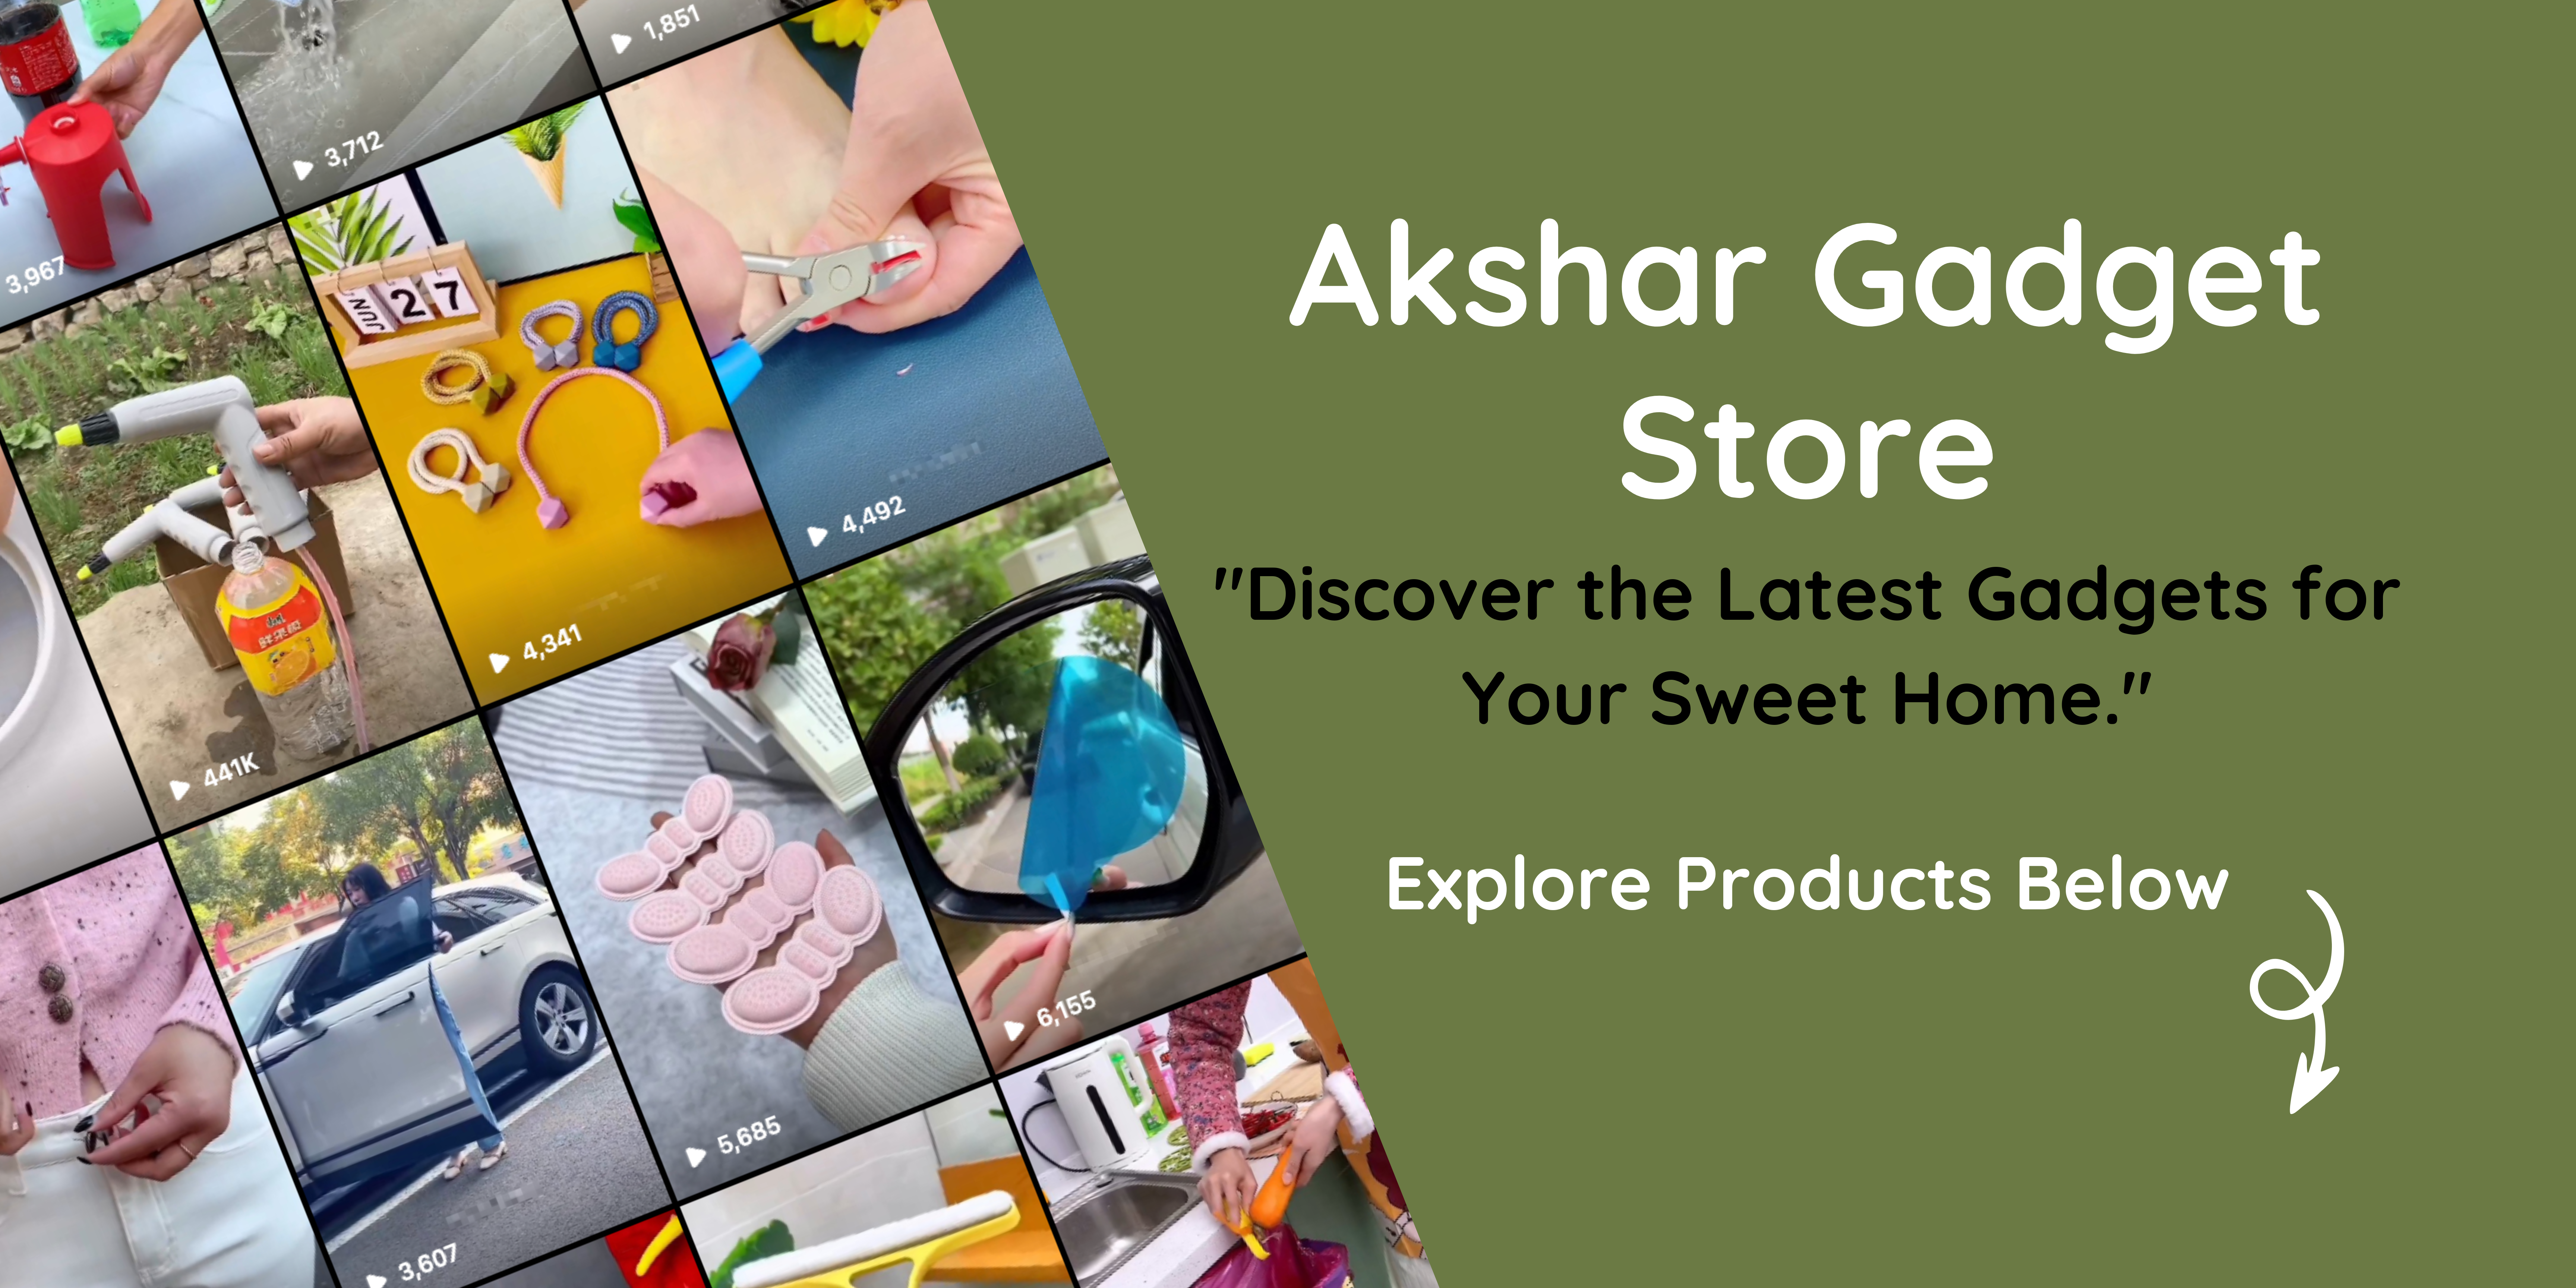 Akshar Gadget